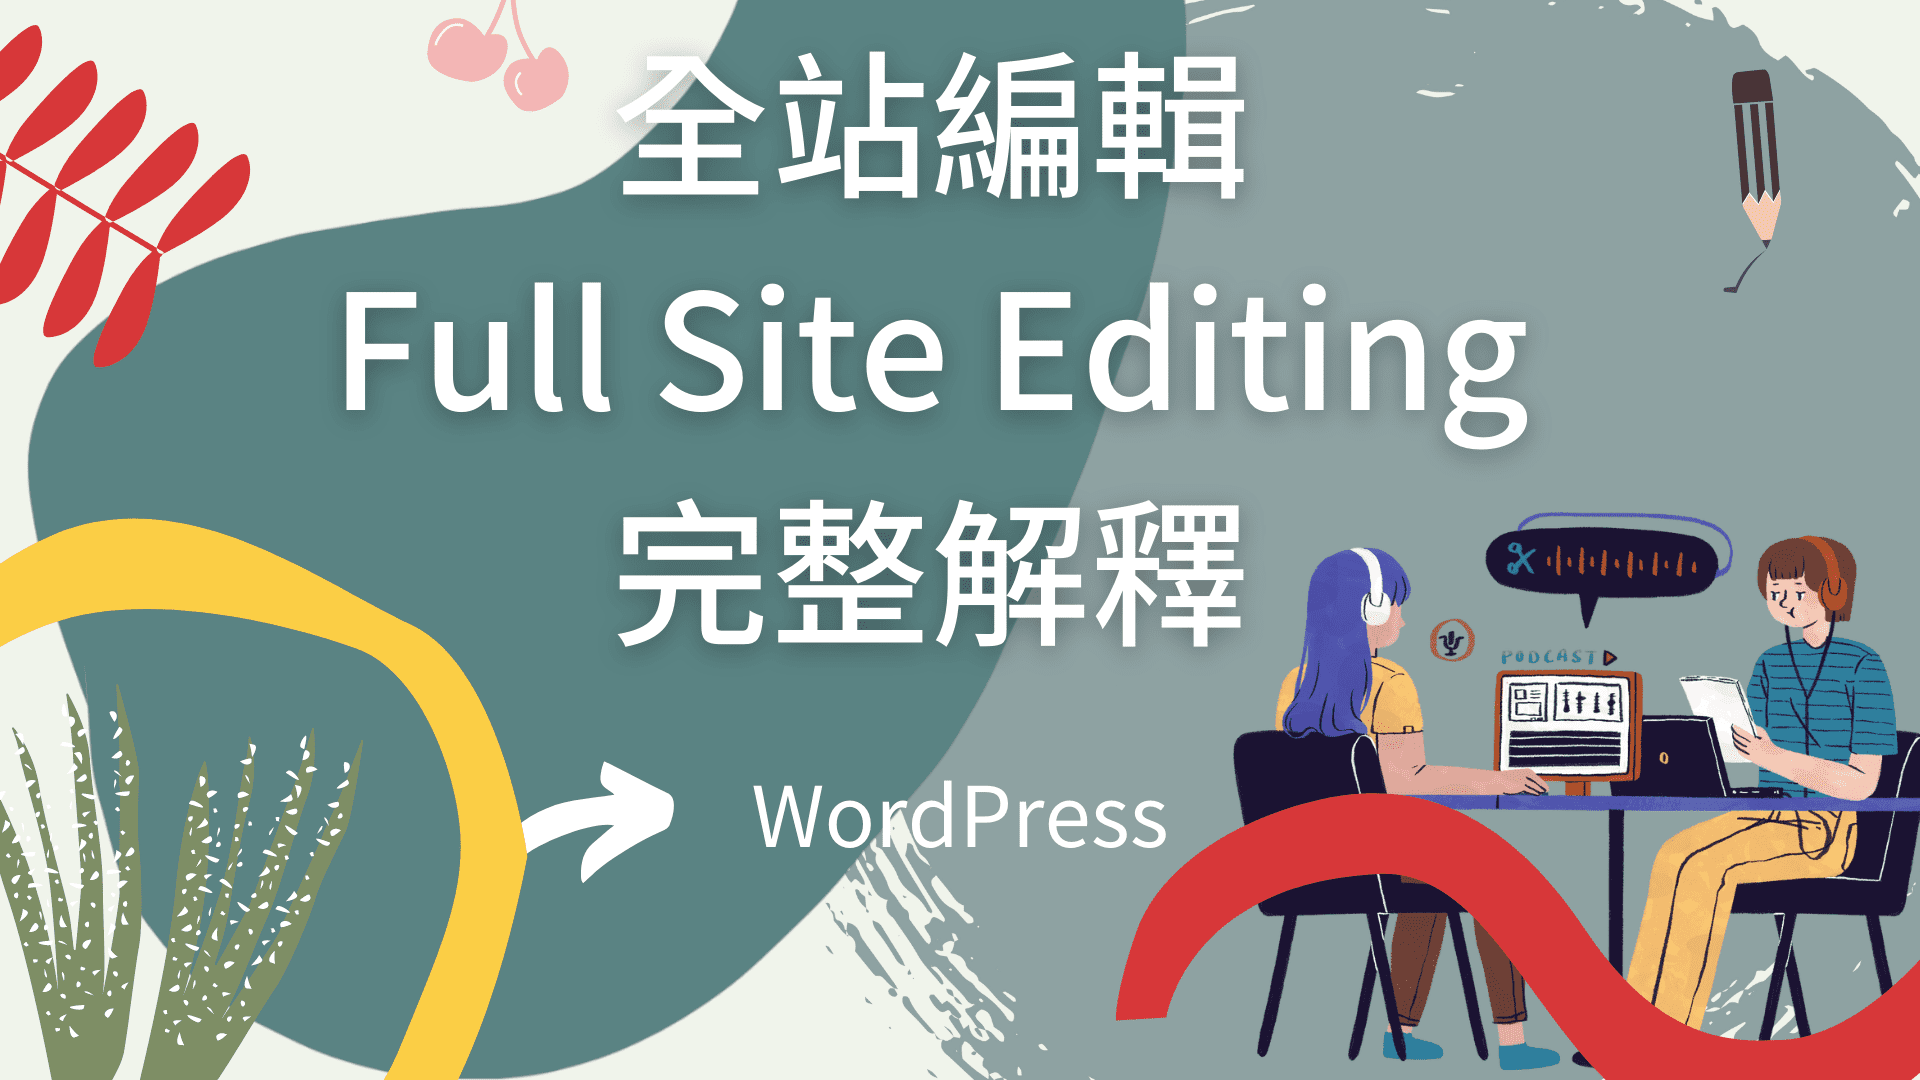 WordPress 全站編輯 Full Site Editing，完整解釋